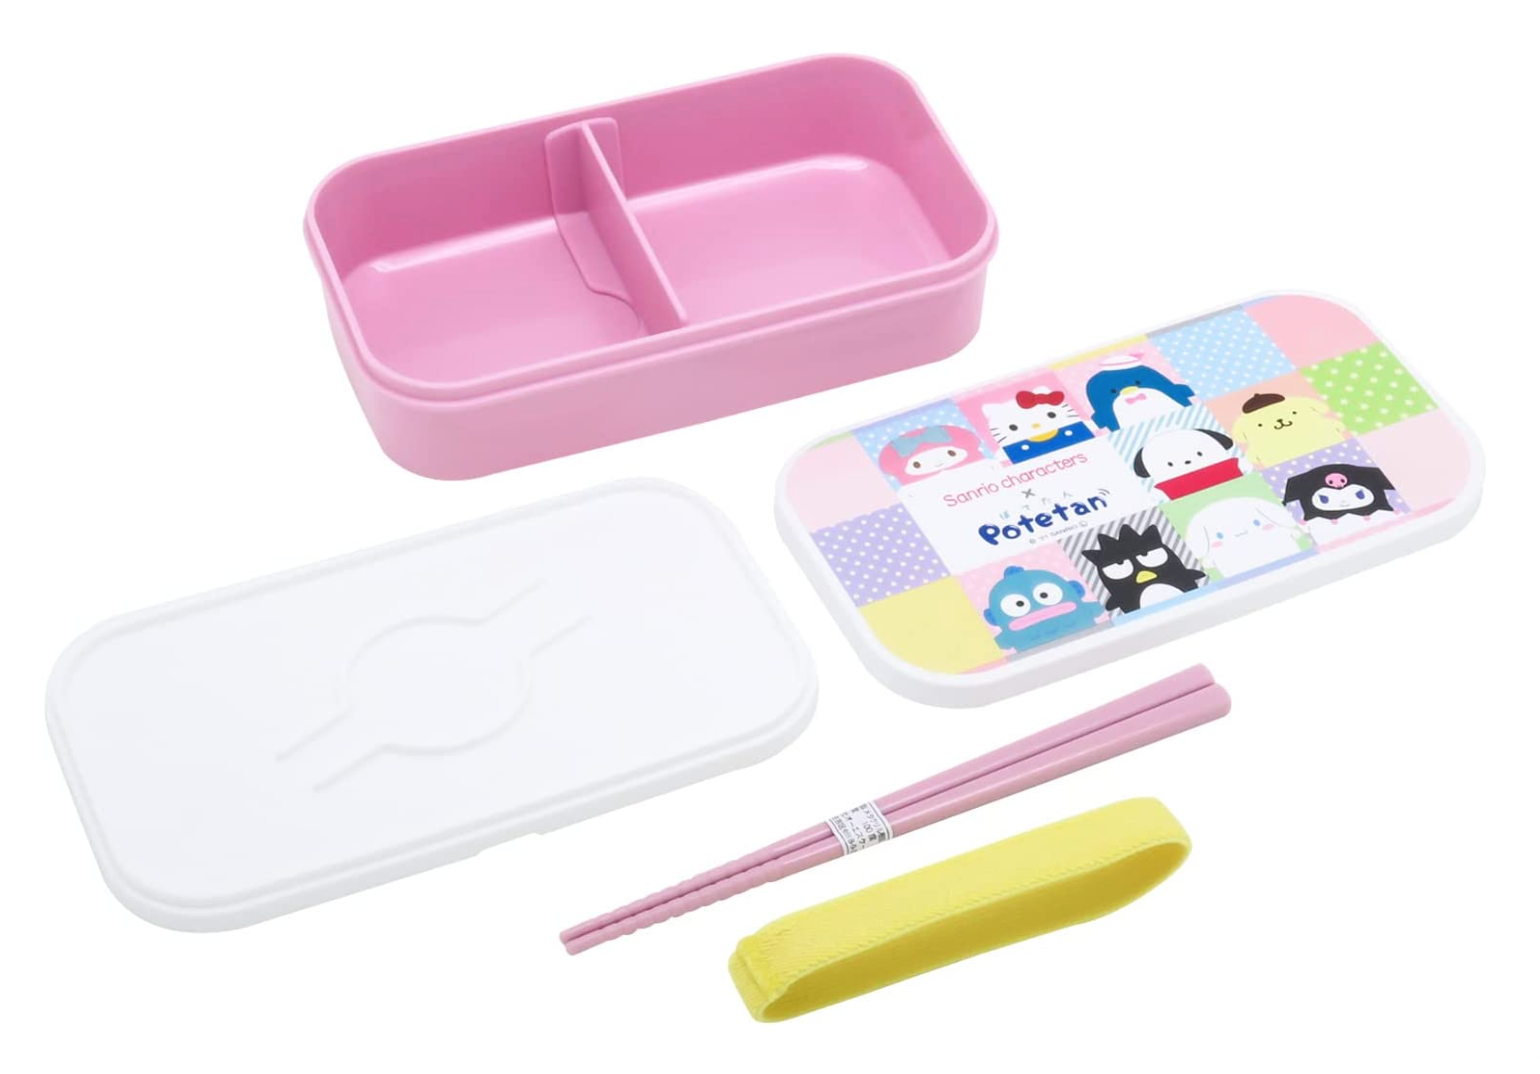 Sanrio Hello Kitty Pink Square Bento Box